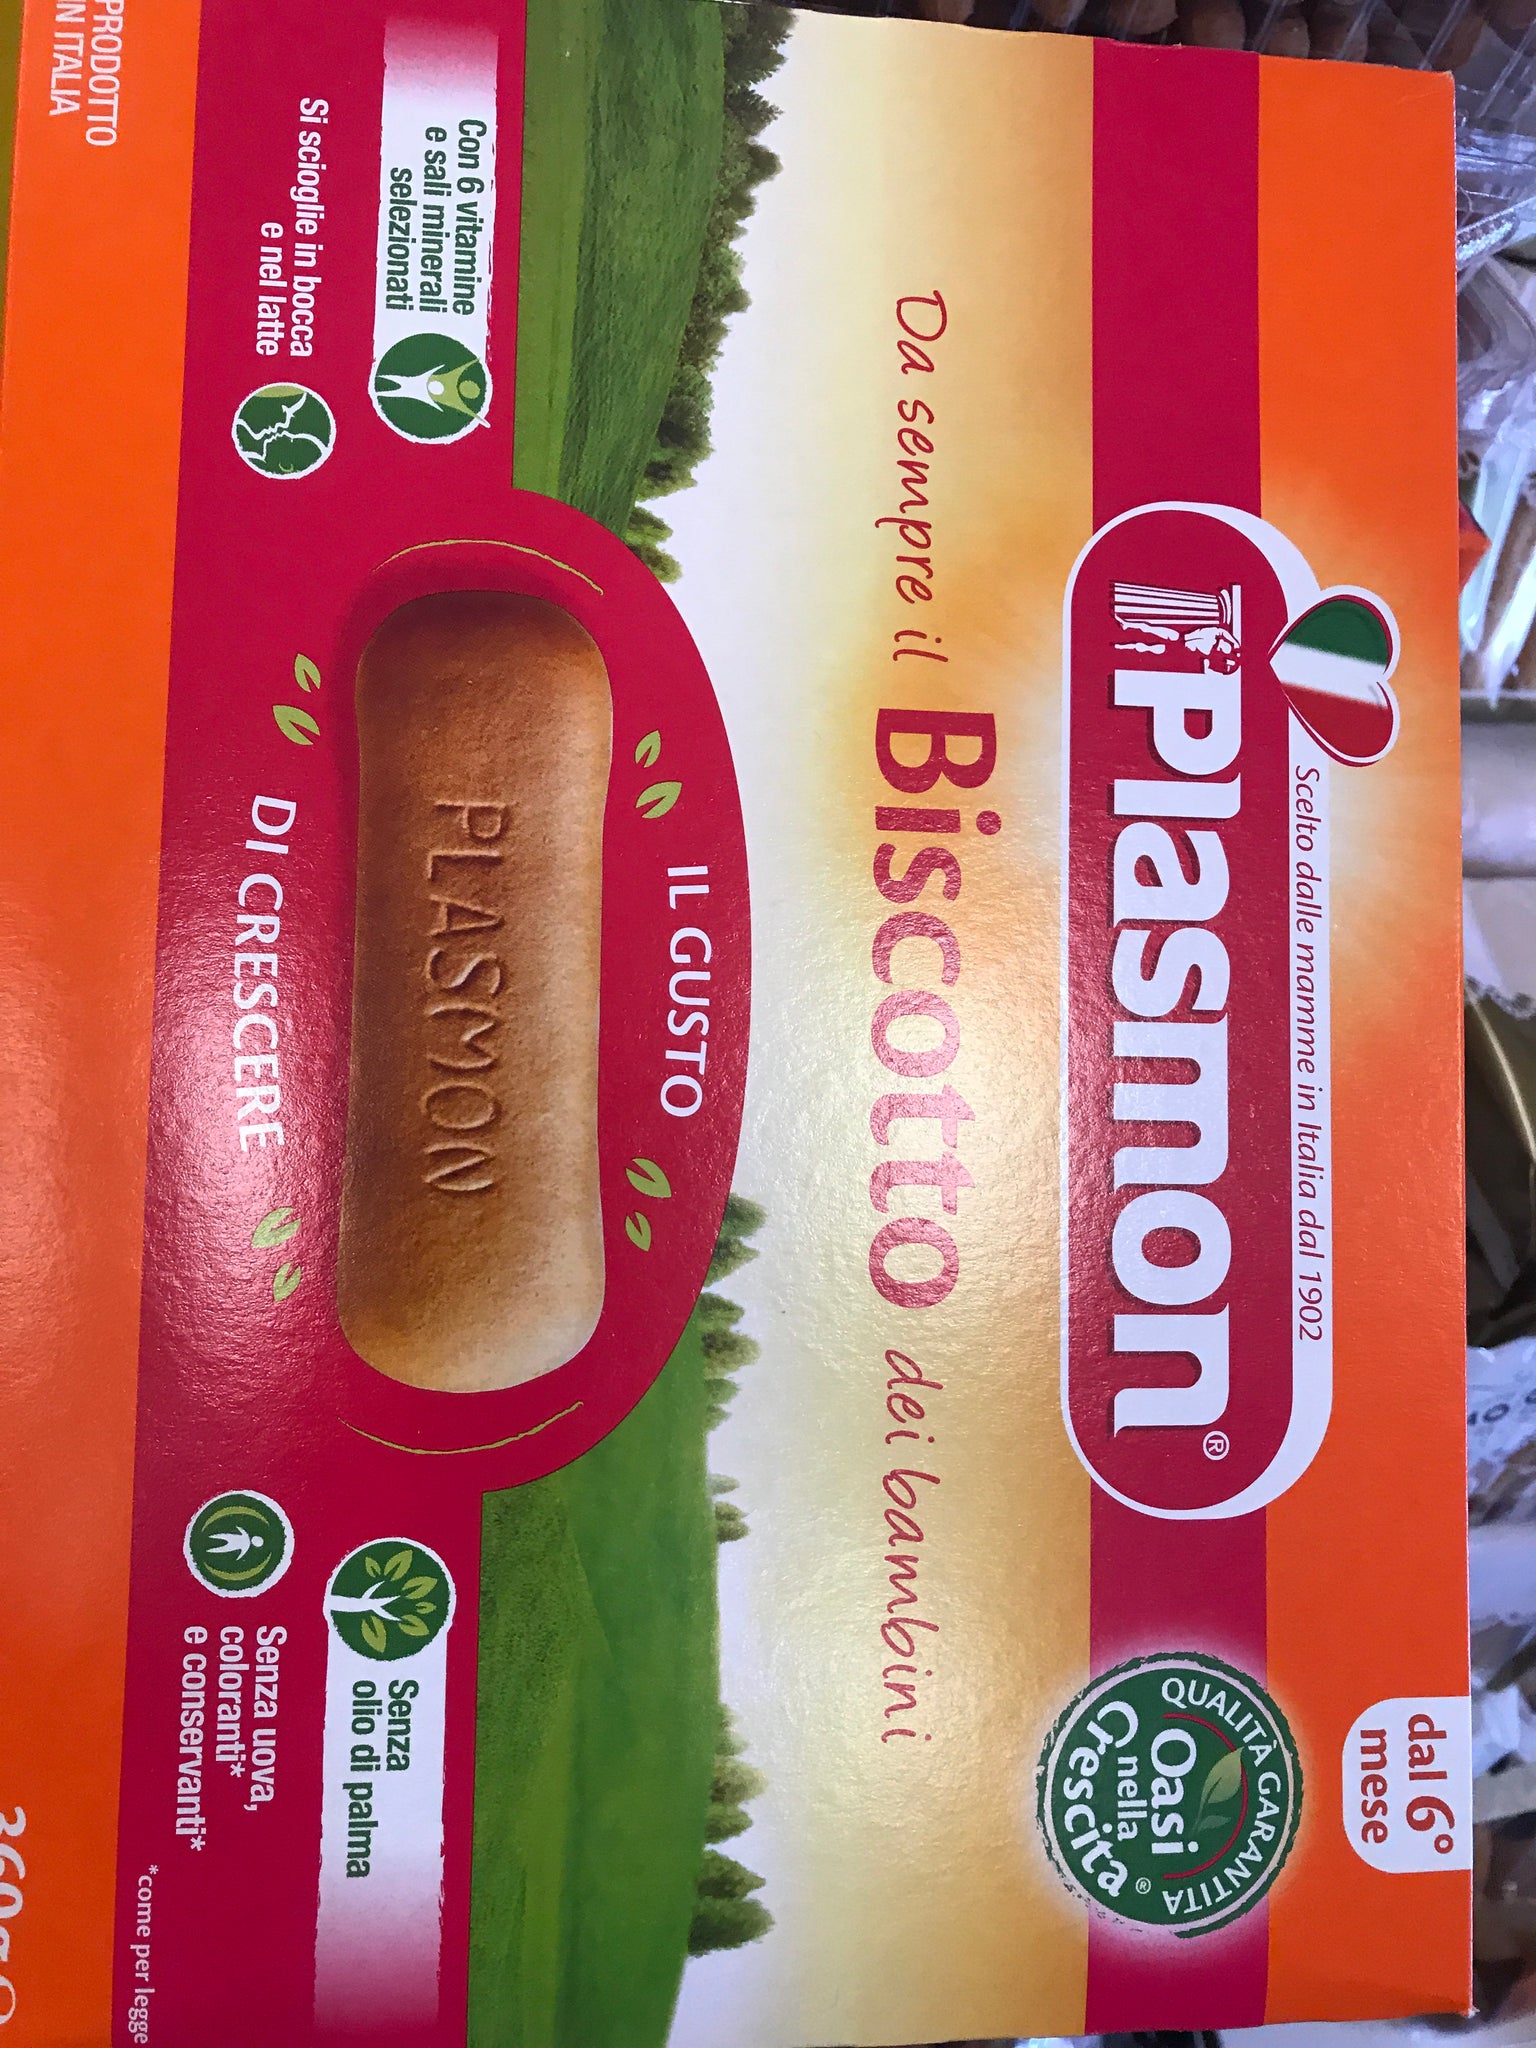 PLASMON BISCOTTINO GRANULATO X2 374 GR (6 in a box) –  -  The best E-commerce of Italian Food in UK